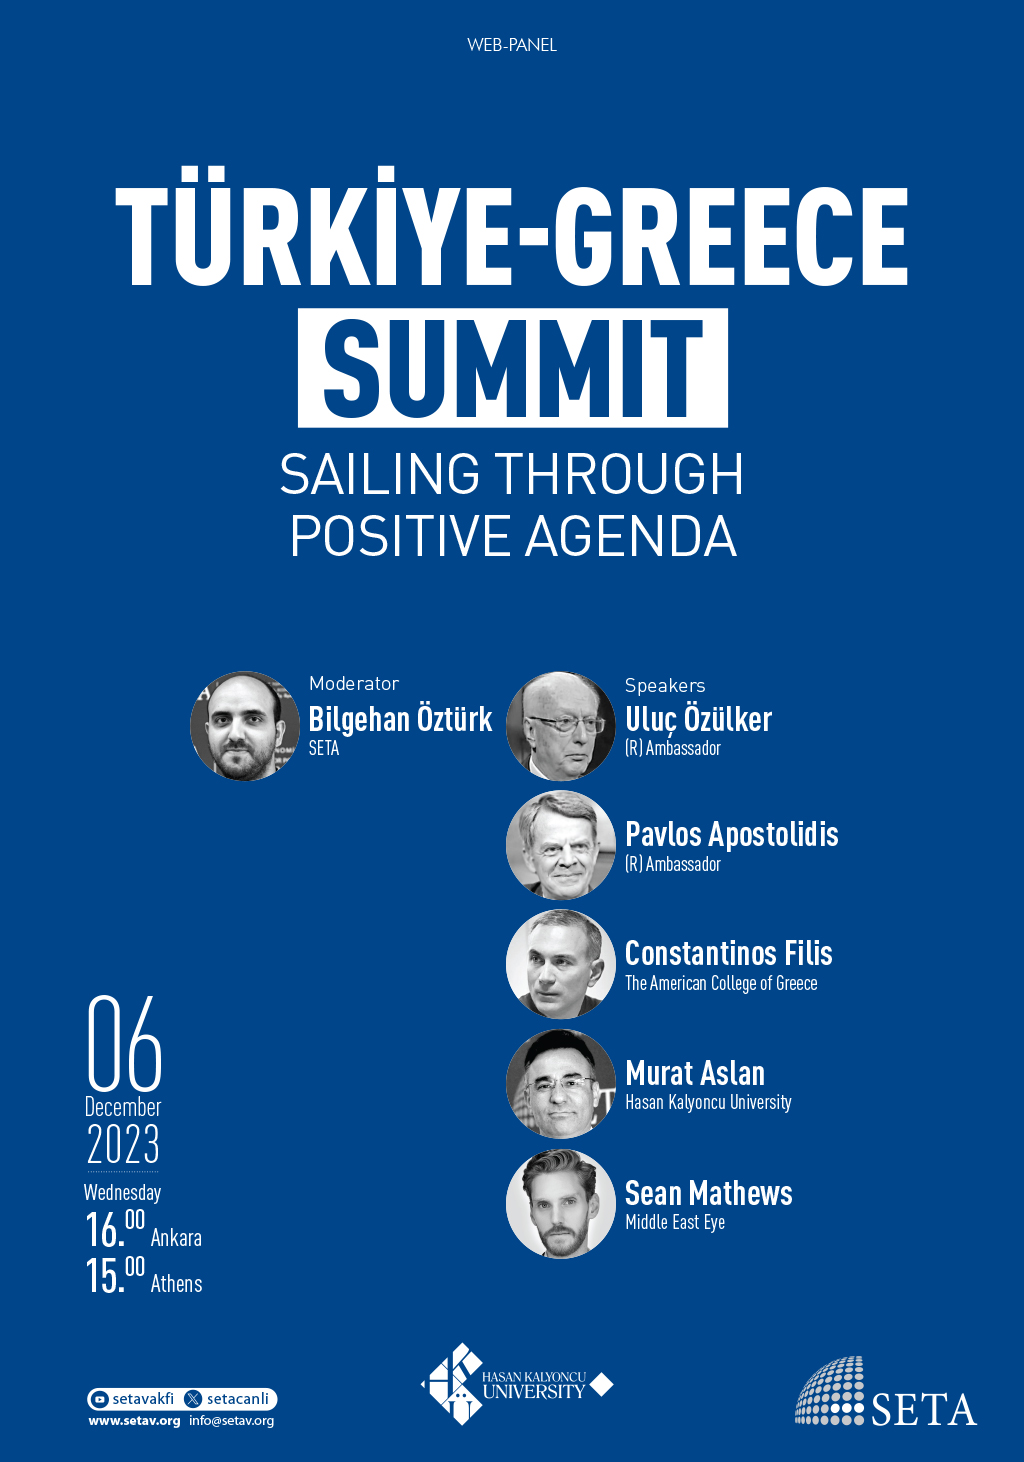 Web Panel: Türkiye-Greece Summit | Sailing Through Positive Agenda